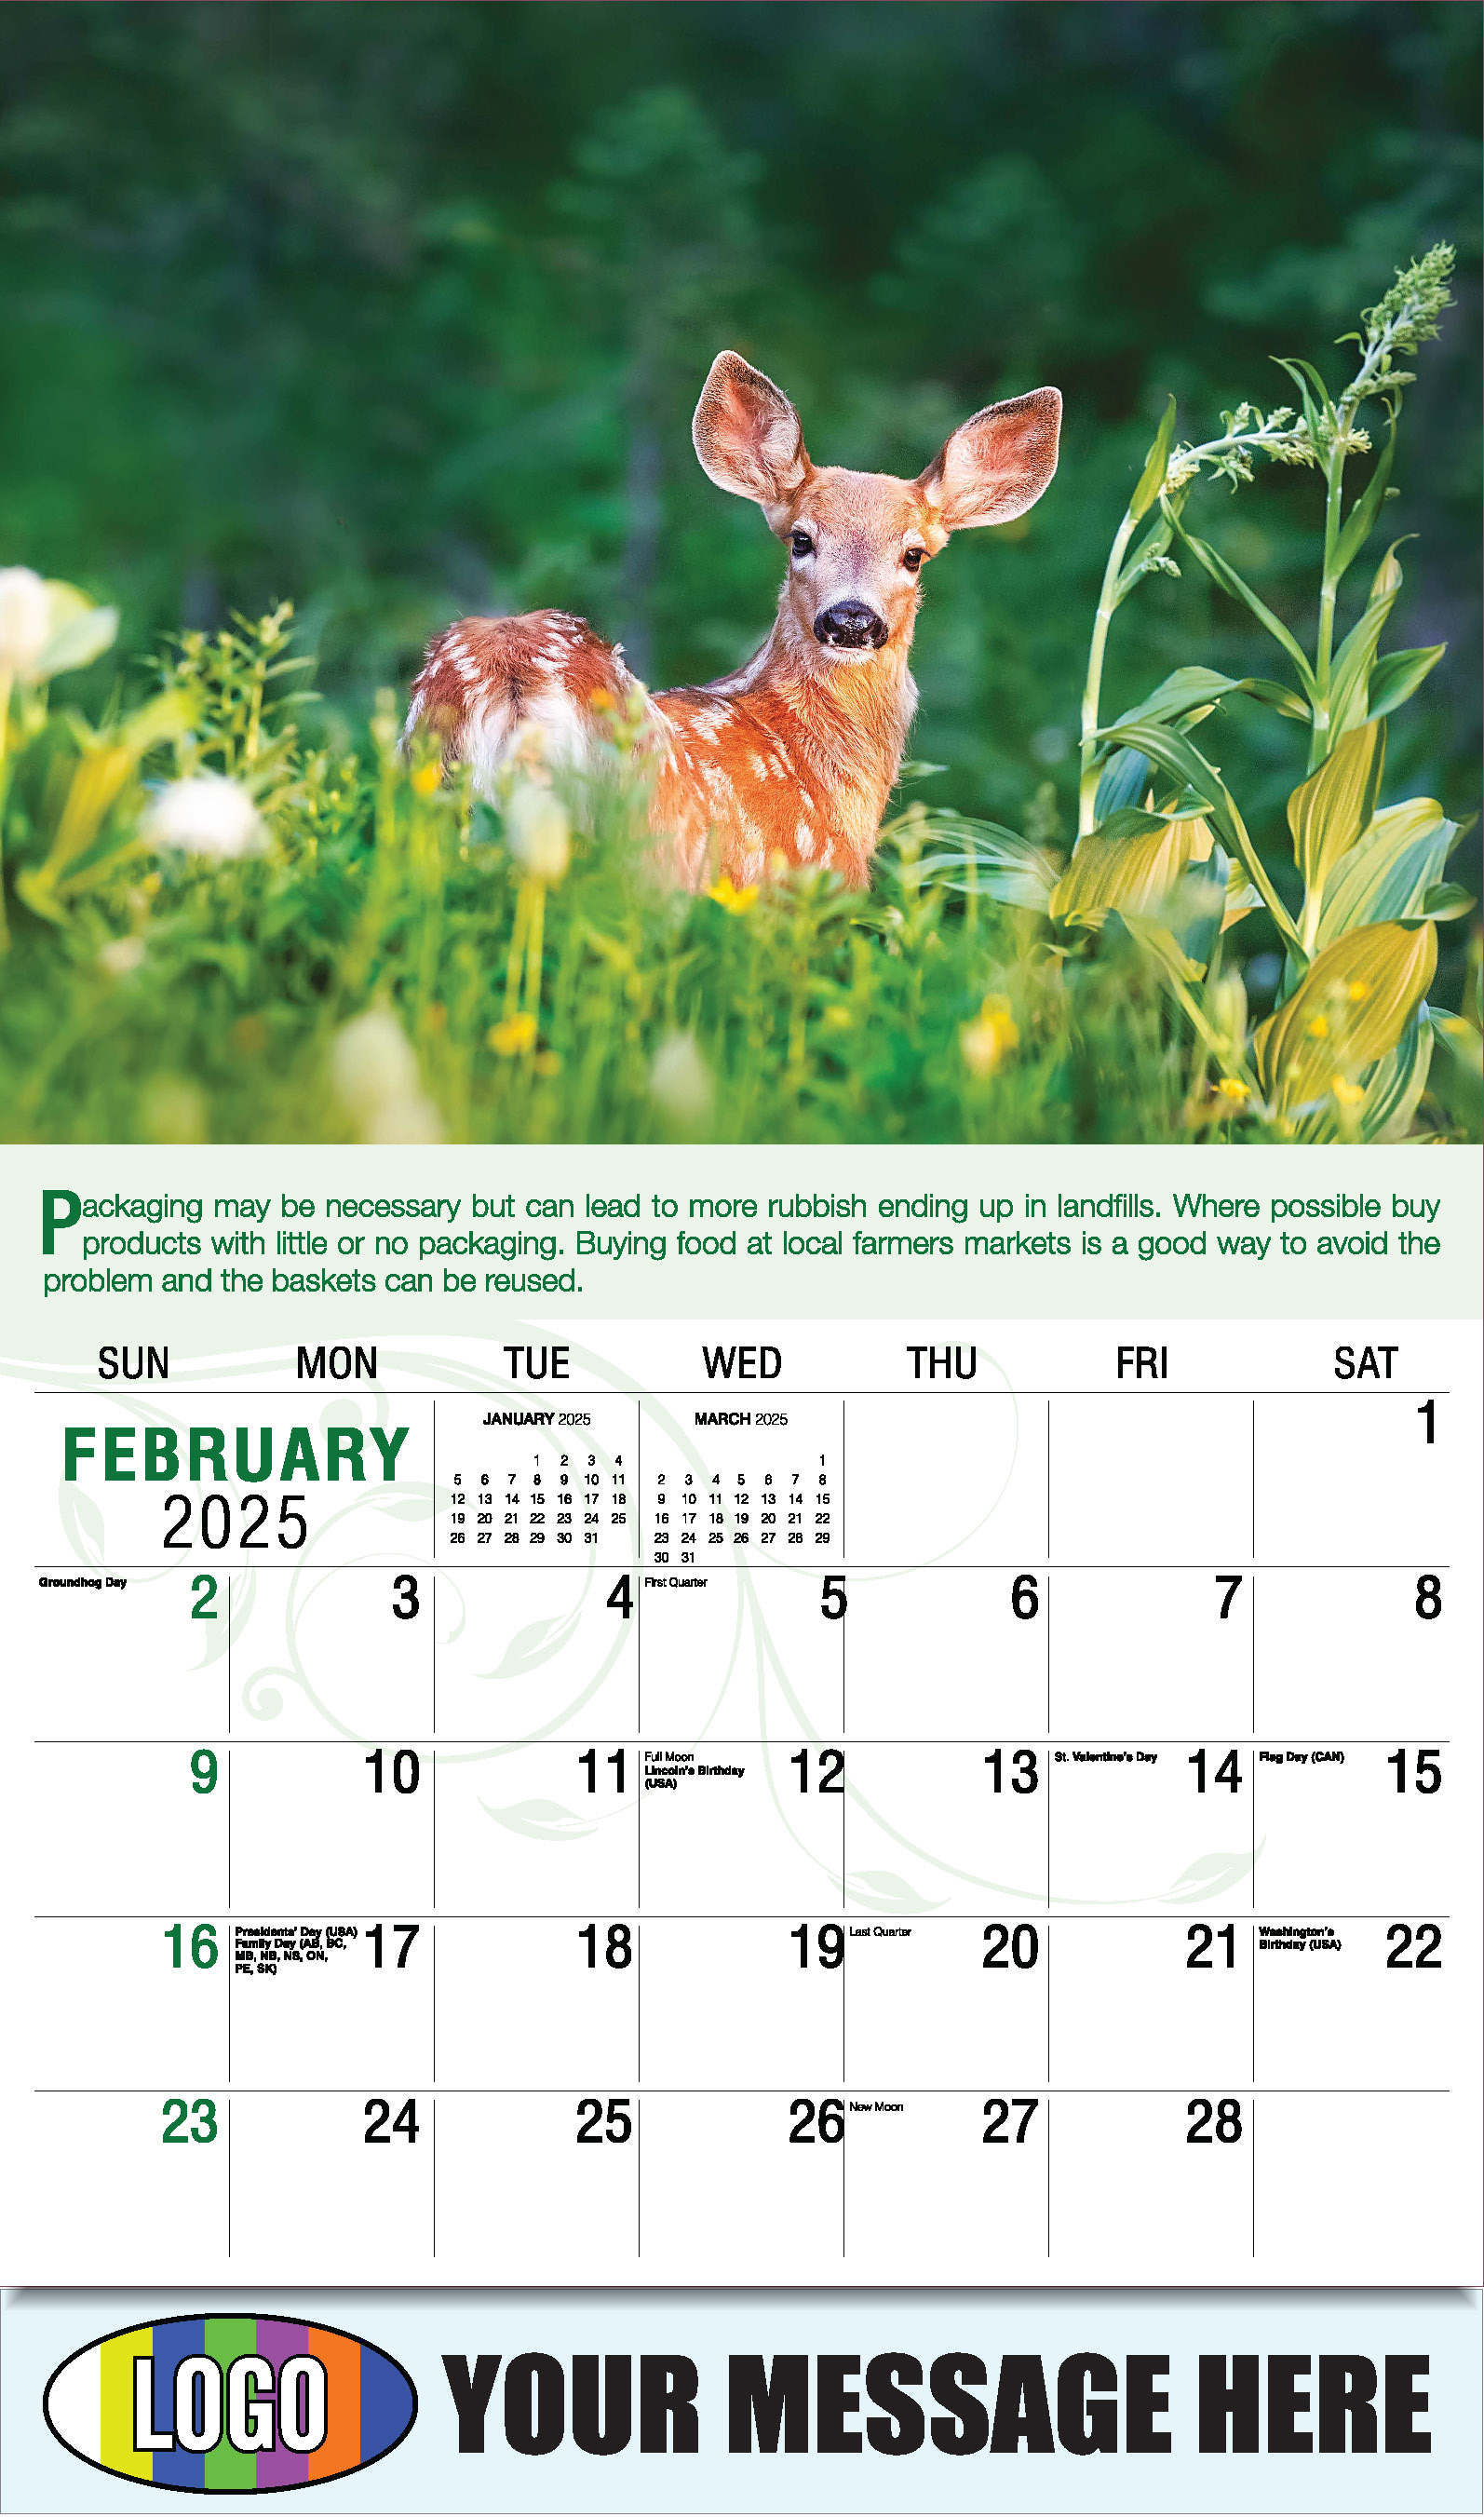 Go Green 2025 Business Promotion Calendar - February